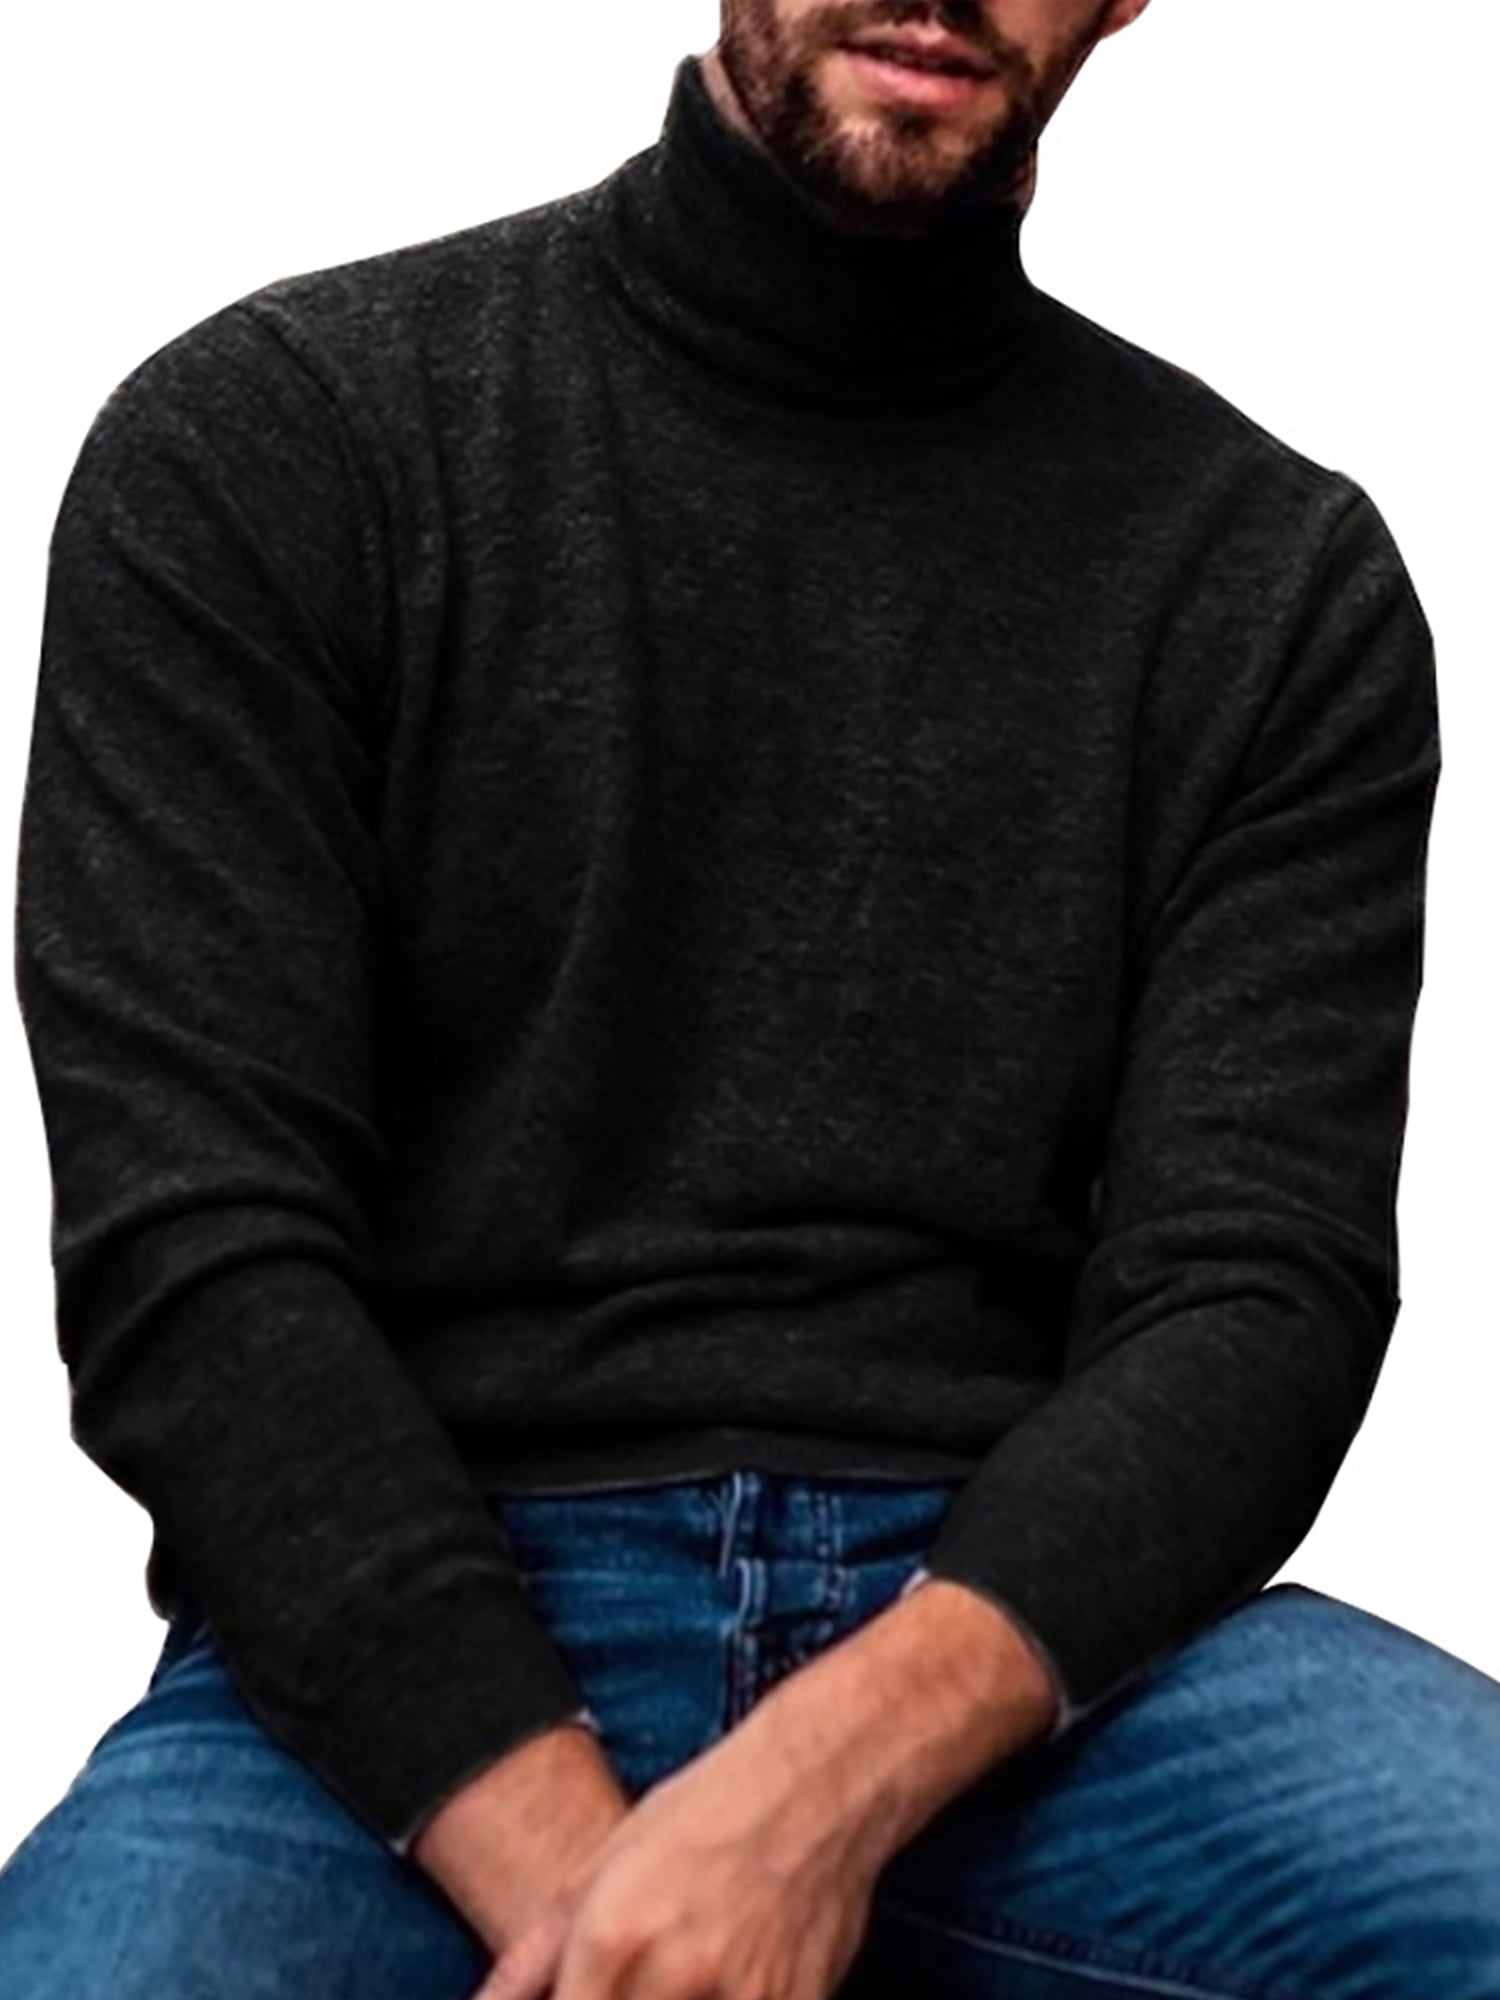 Men's Turtleneck Knitted Sweater Winter Warm Long Sleeve Jumper Pullover Blouse